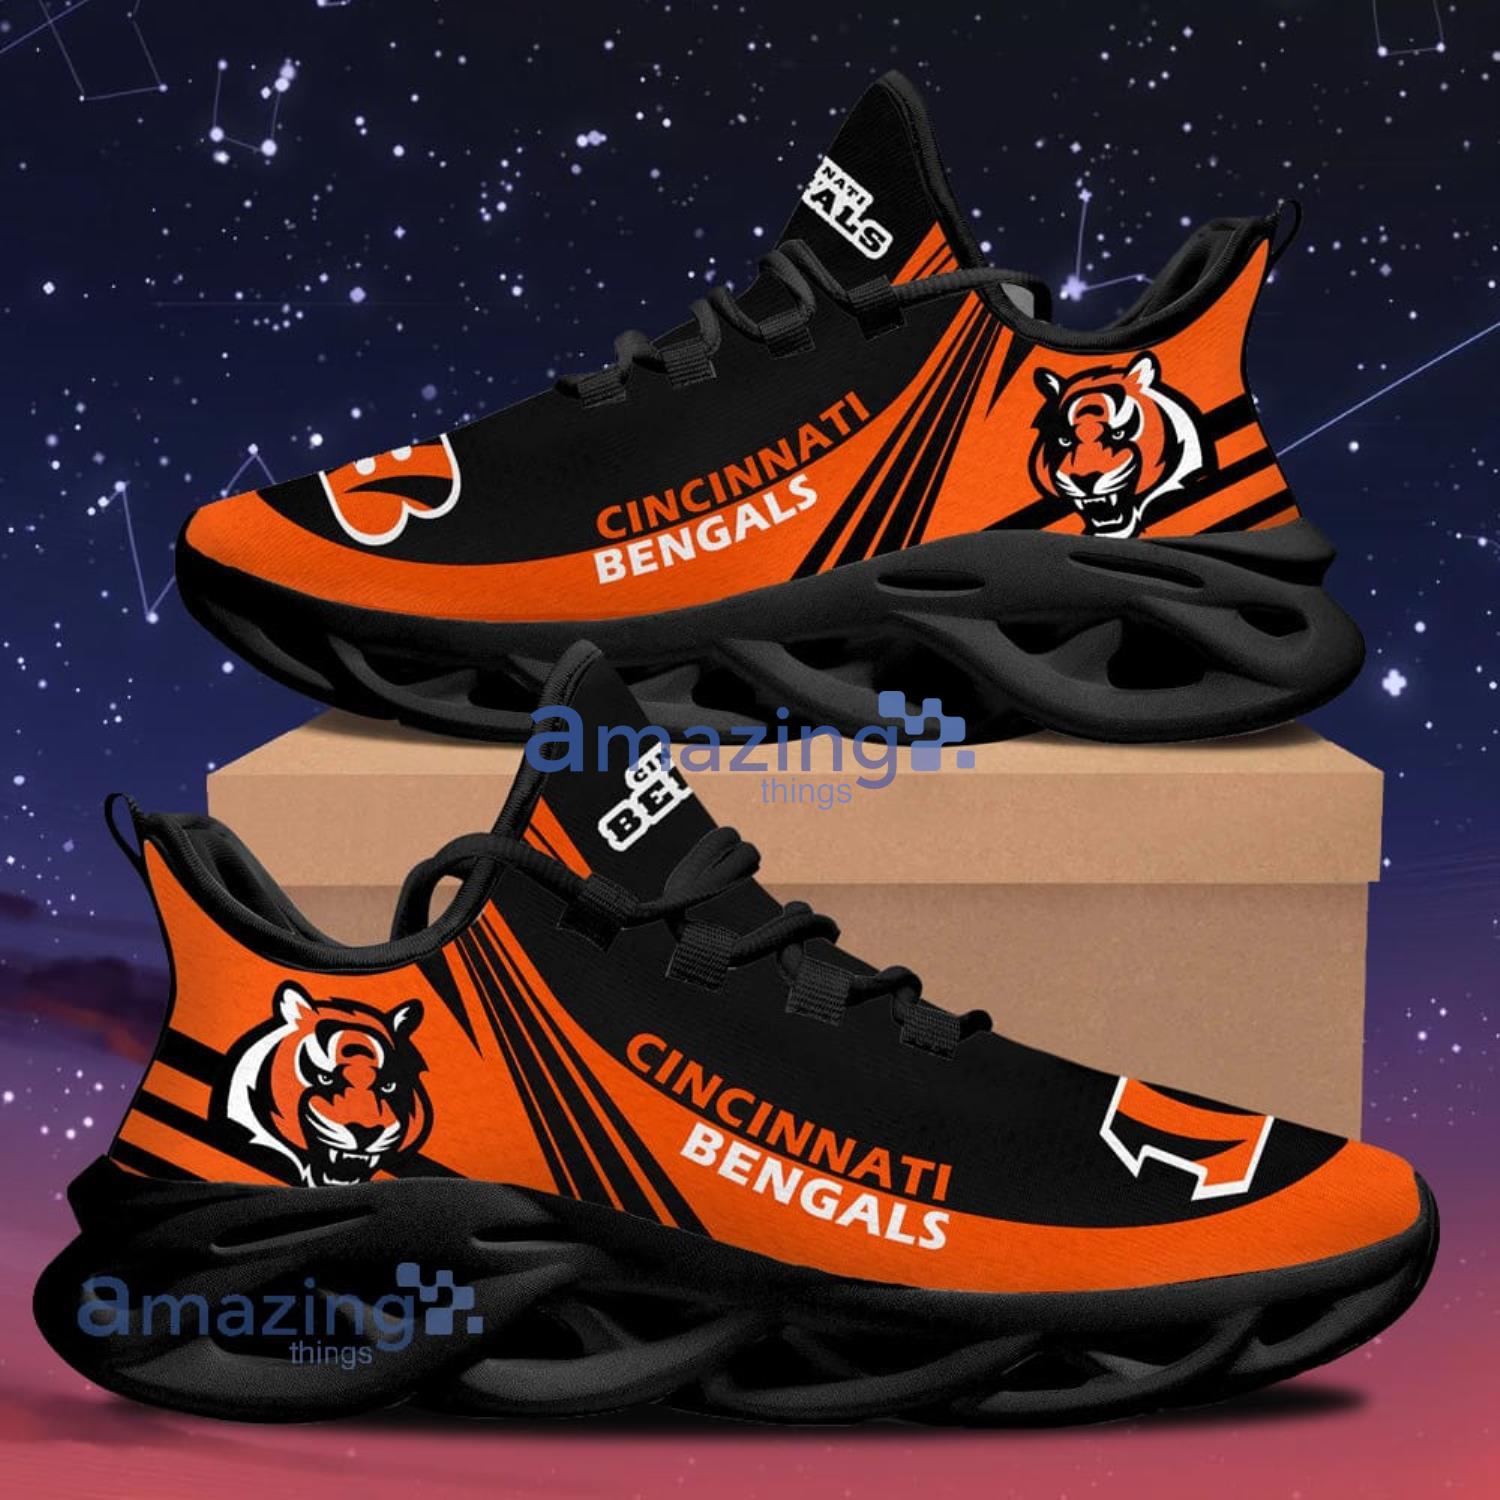 Cincinnati Bengals New Trend Max Soul Shoes Running Sneakers Product Photo 1